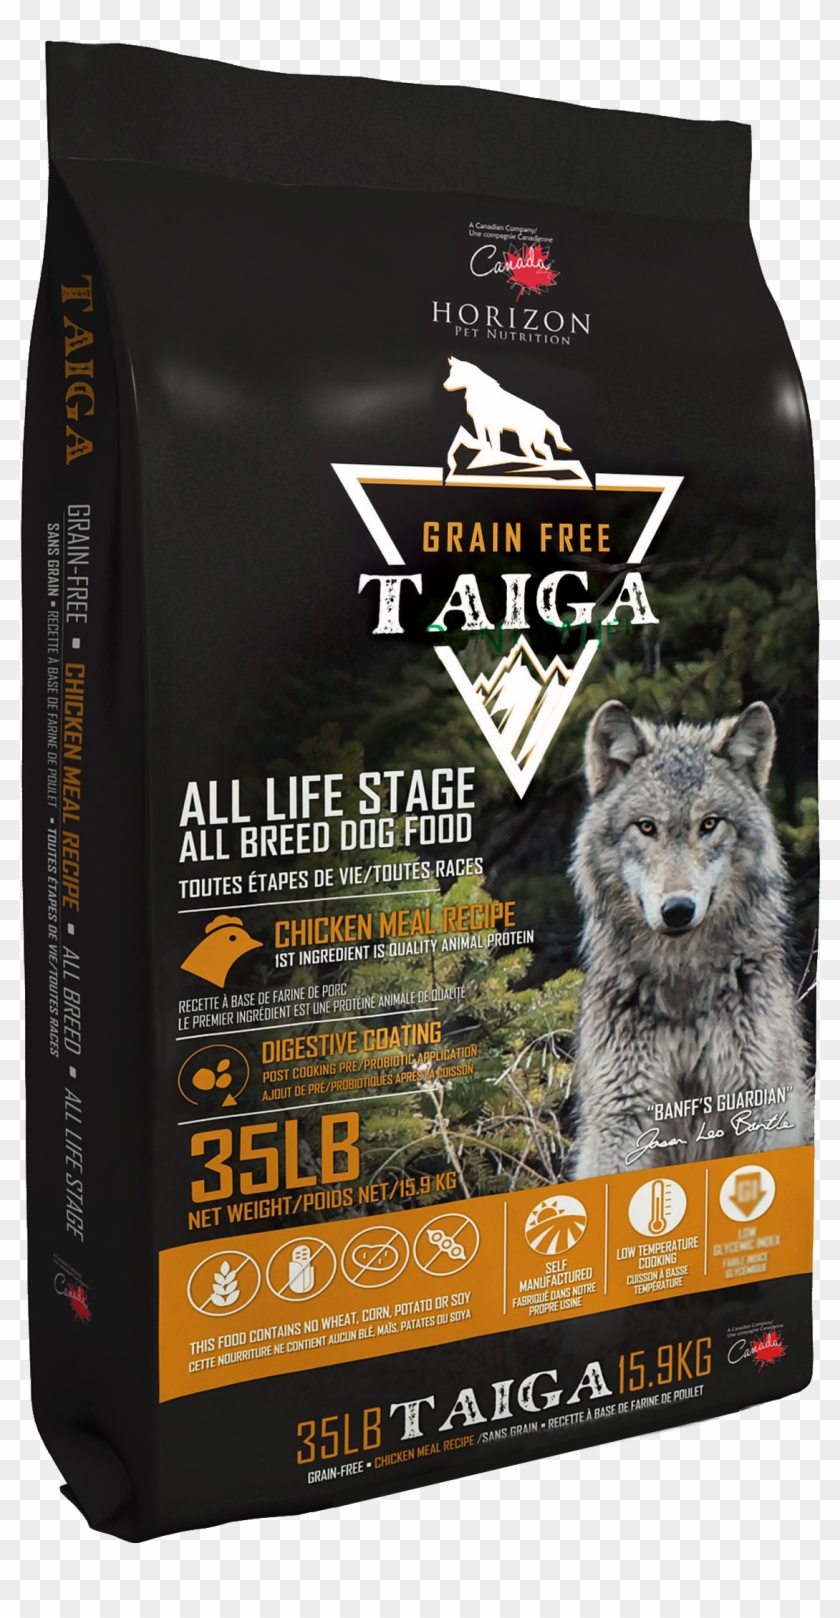 New Chicken Taiga Bag Image - Horizon Taiga Dog Food Clipart #5353842